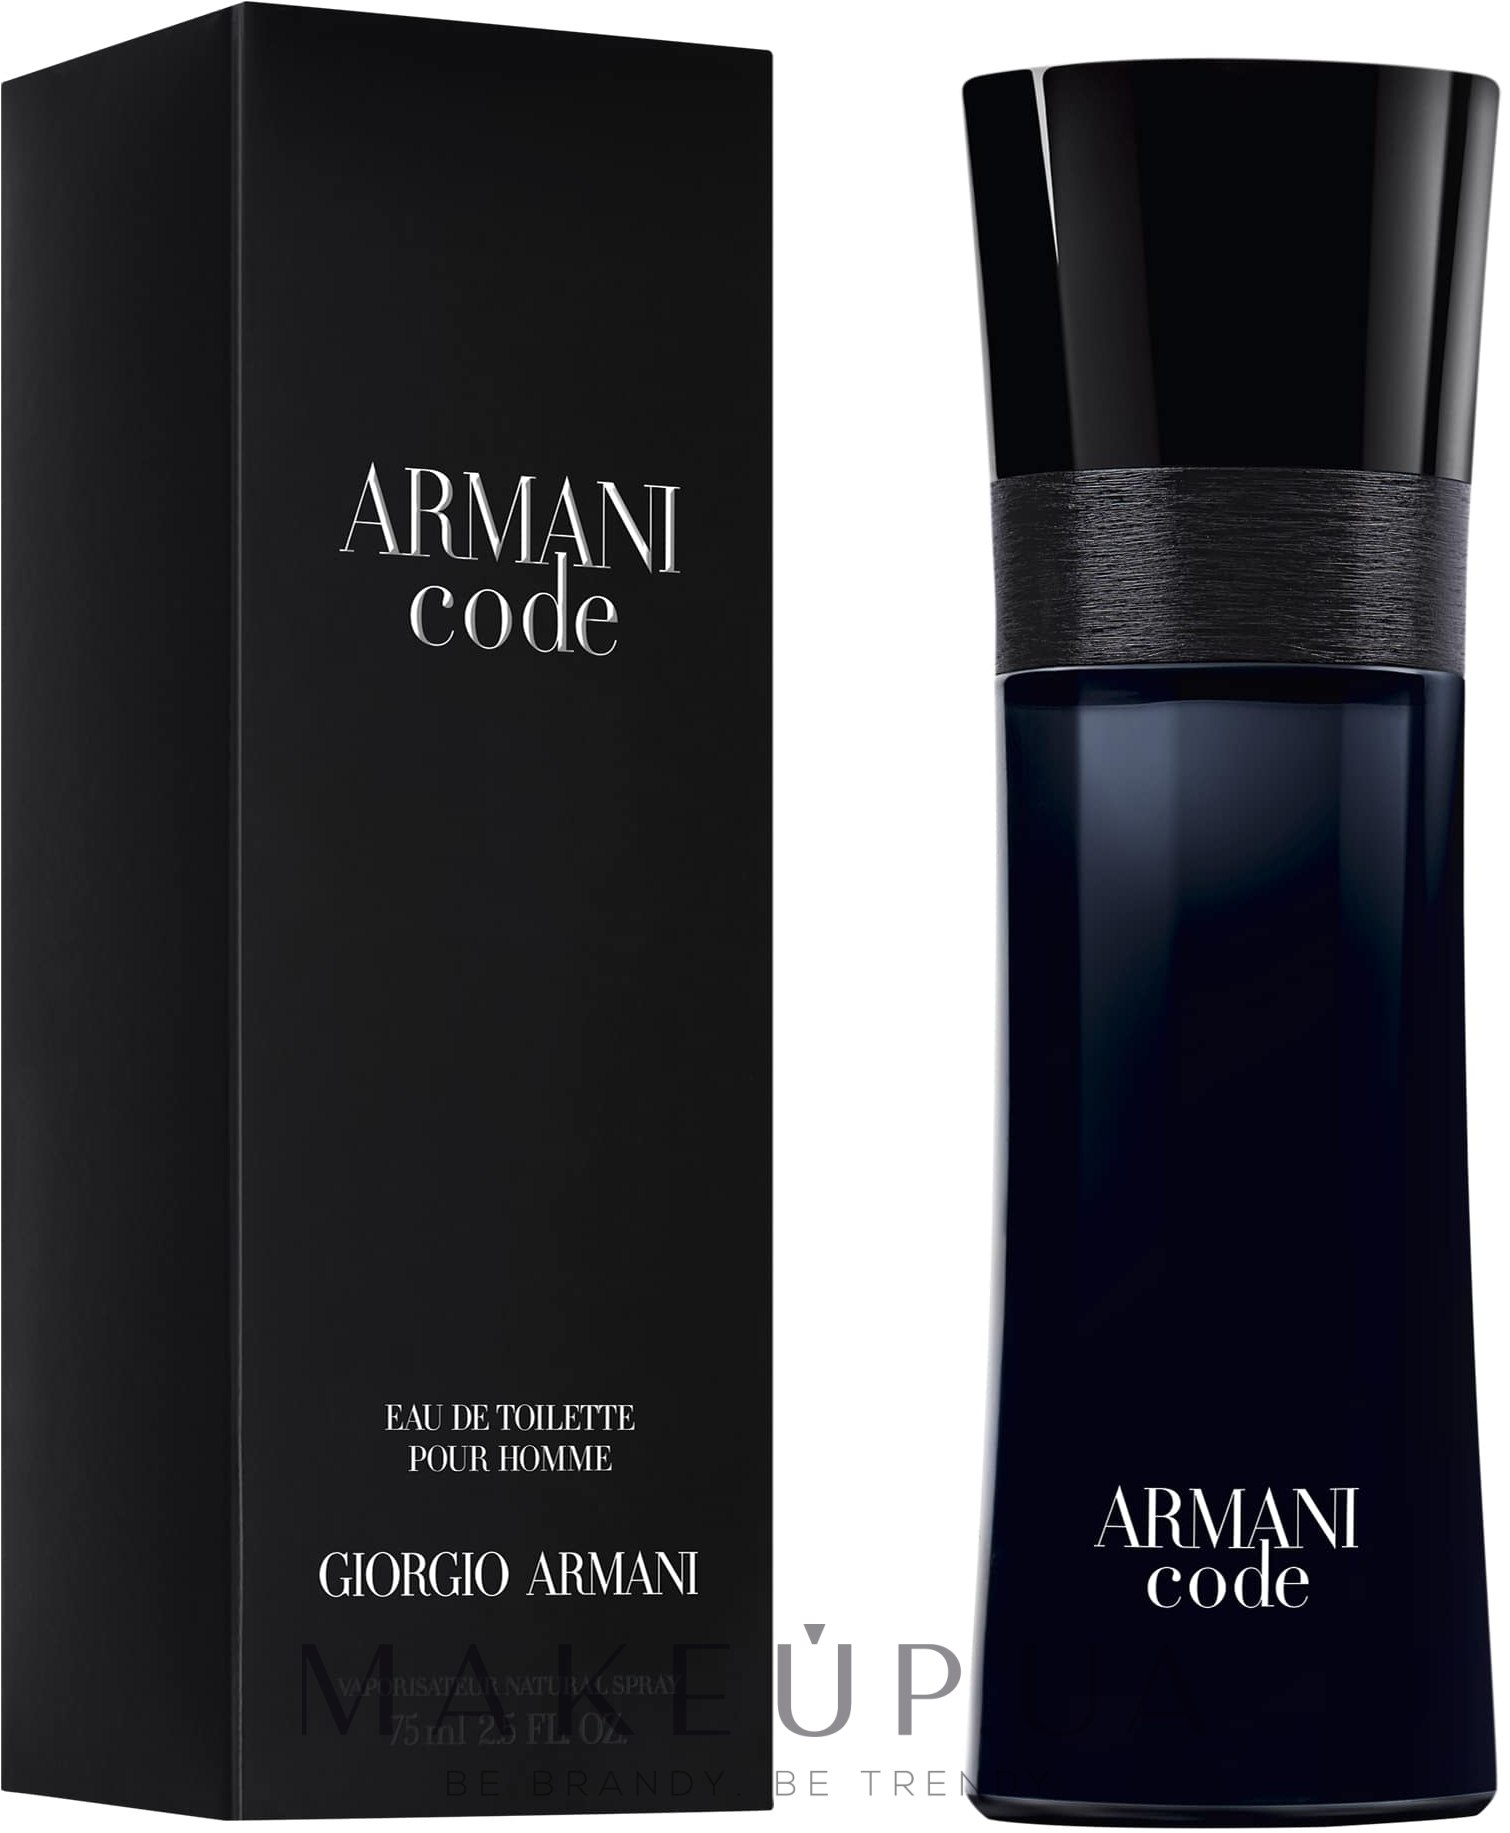 Code pour homme. Giorgio Armani code pour homme 125ml. Armani Black code Giorgio Armani. Armani code Parfum Giorgio Armani. Armani code for women Giorgio Armani.